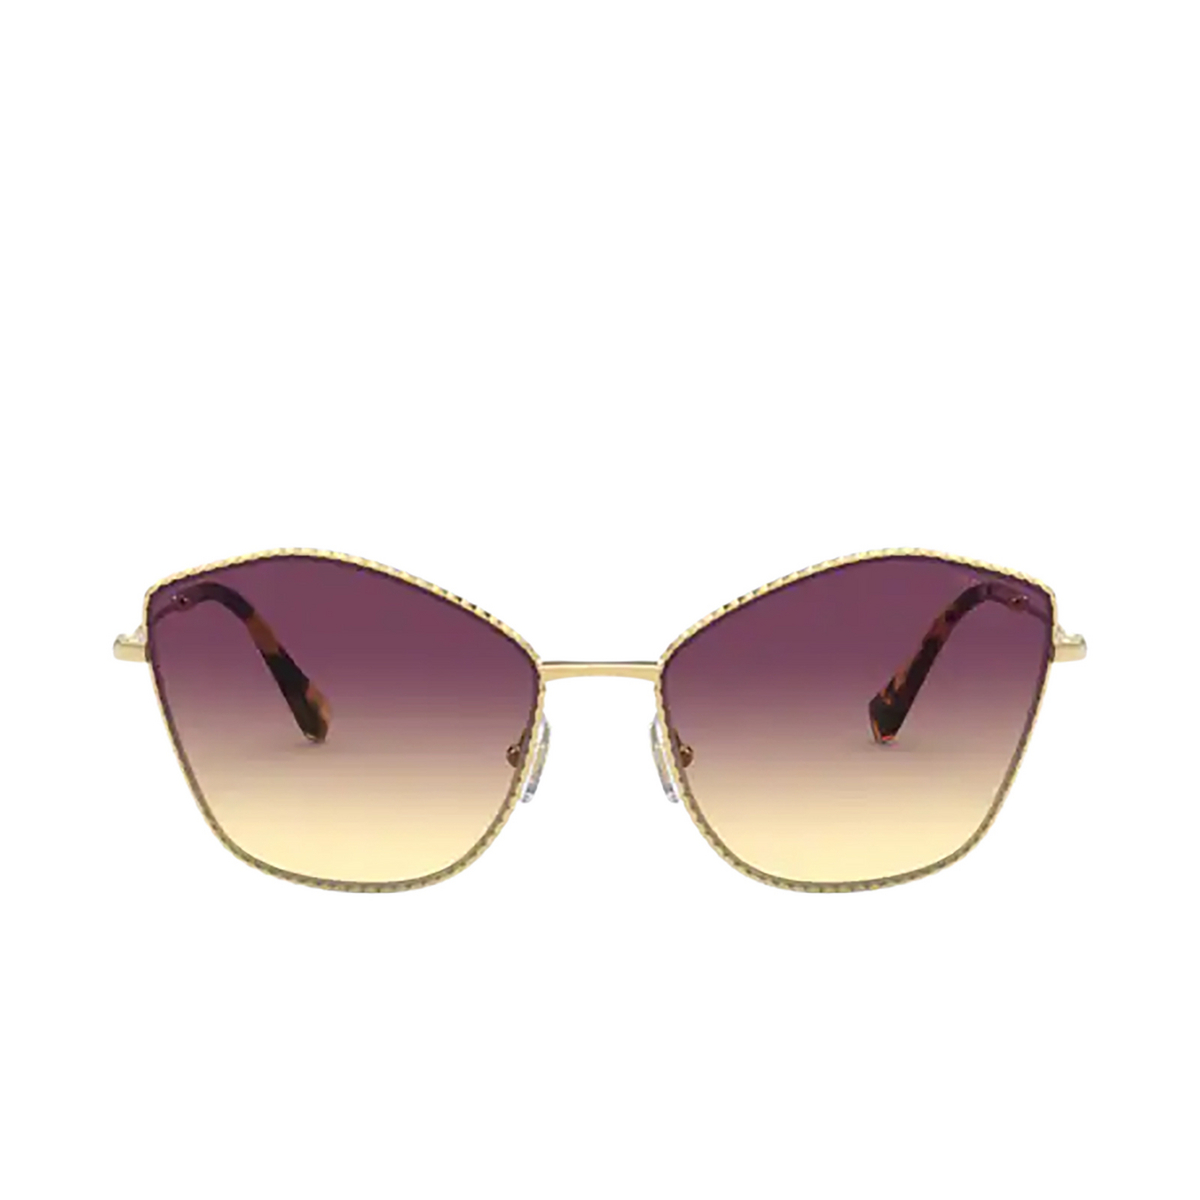 Miu Miu® Irregular Sunglasses: MU 60VS color Gold 5AK09B - front view.